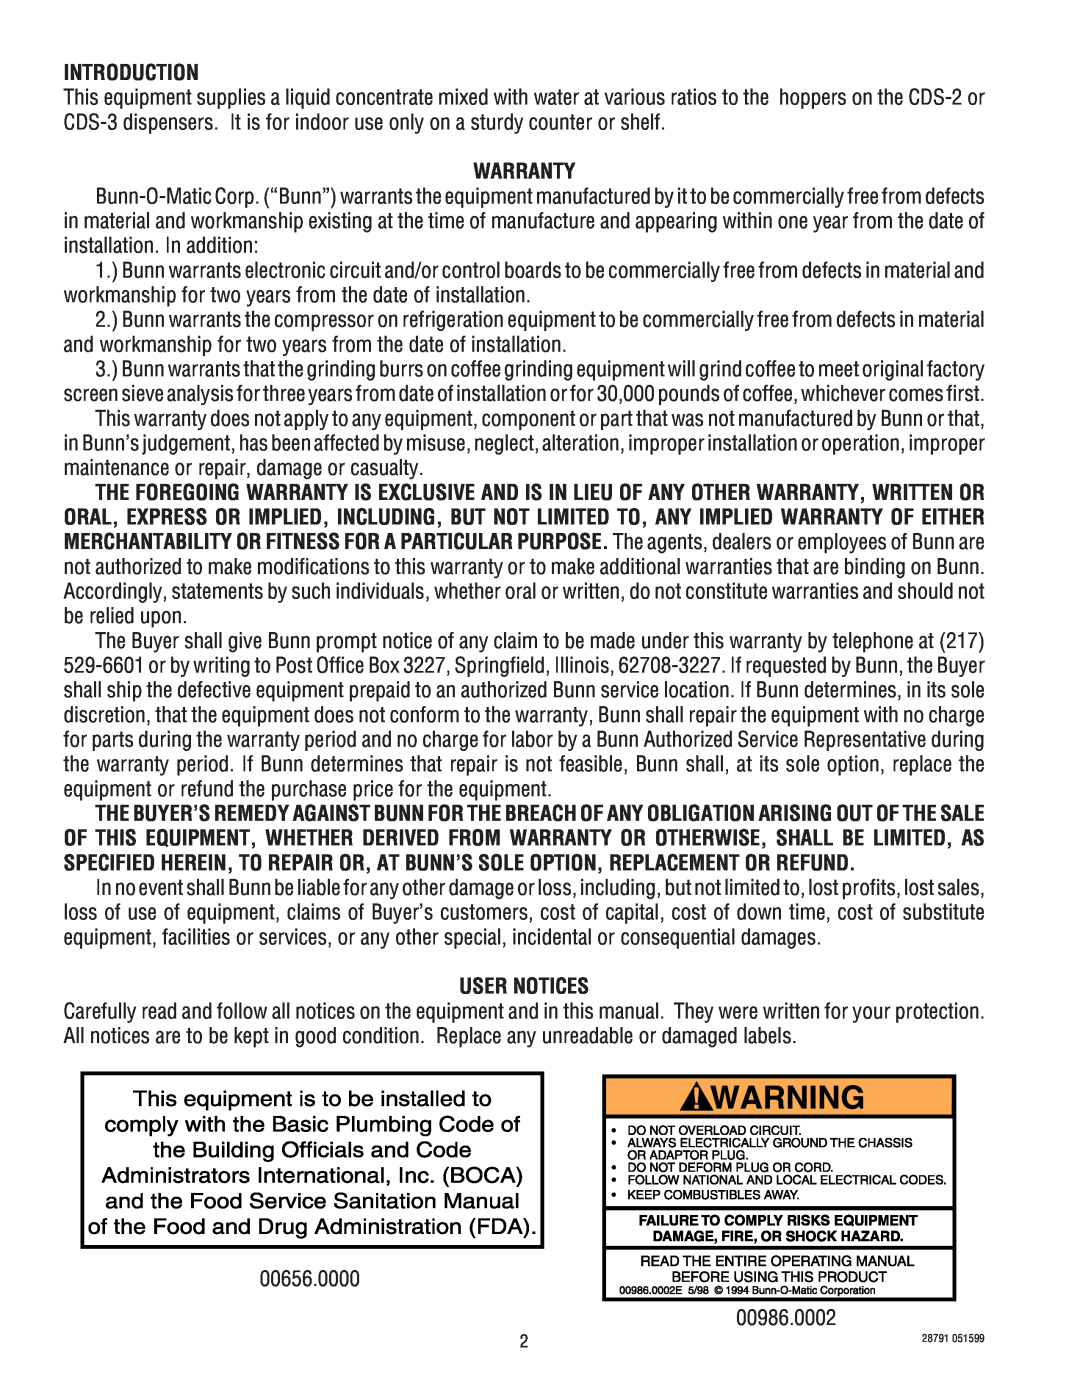 Bunn AFPO-3, AFPO-2 SL service manual Introduction, Warranty, User Notices 